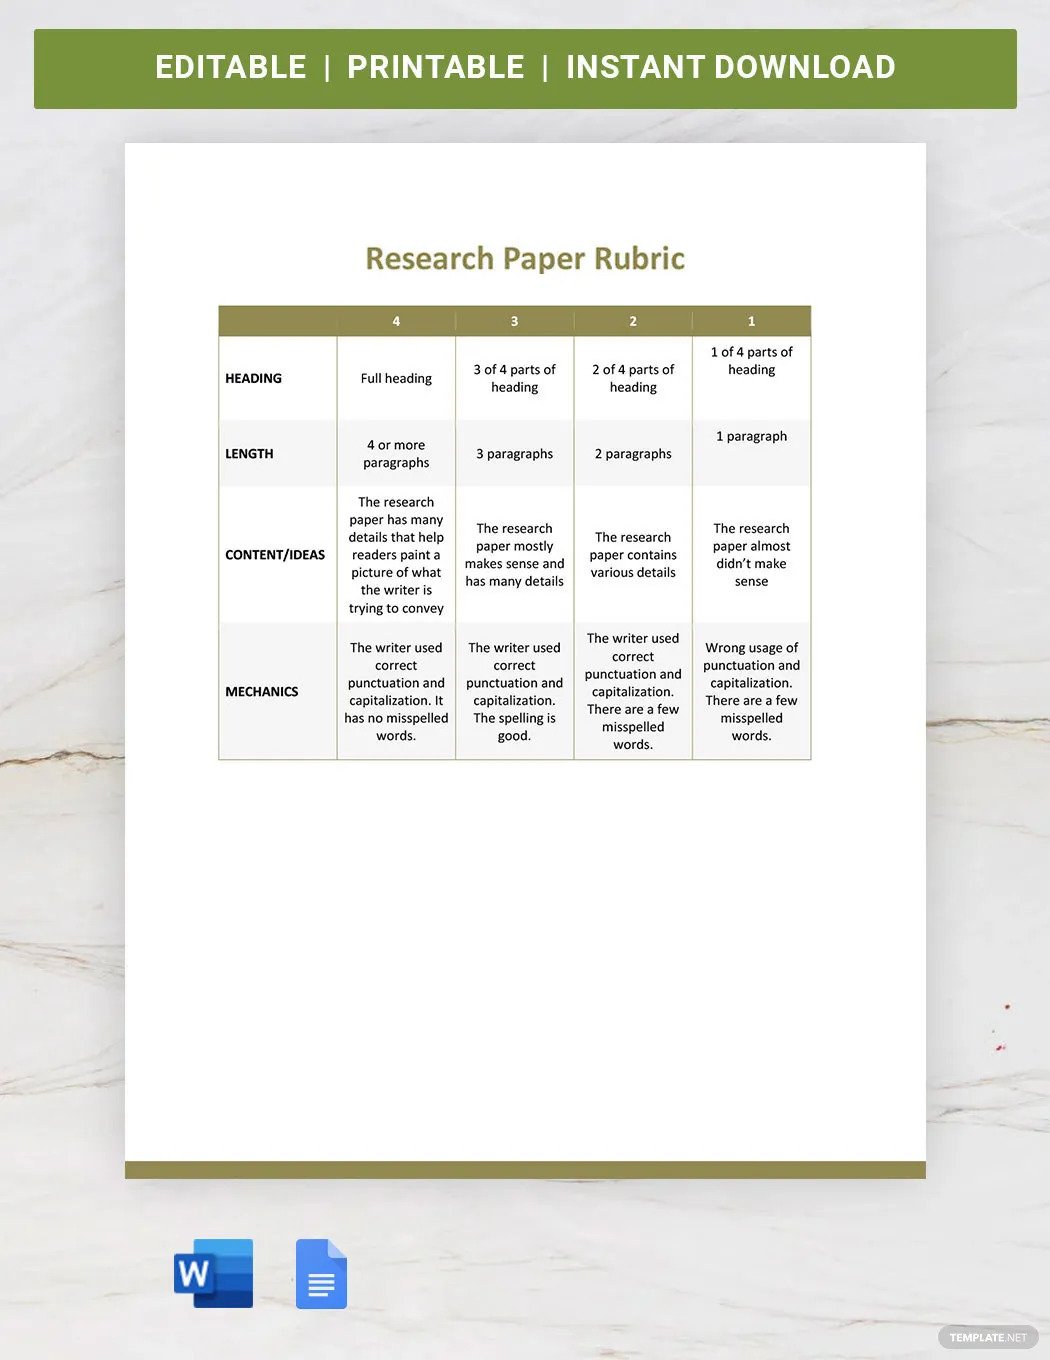 research-rubric